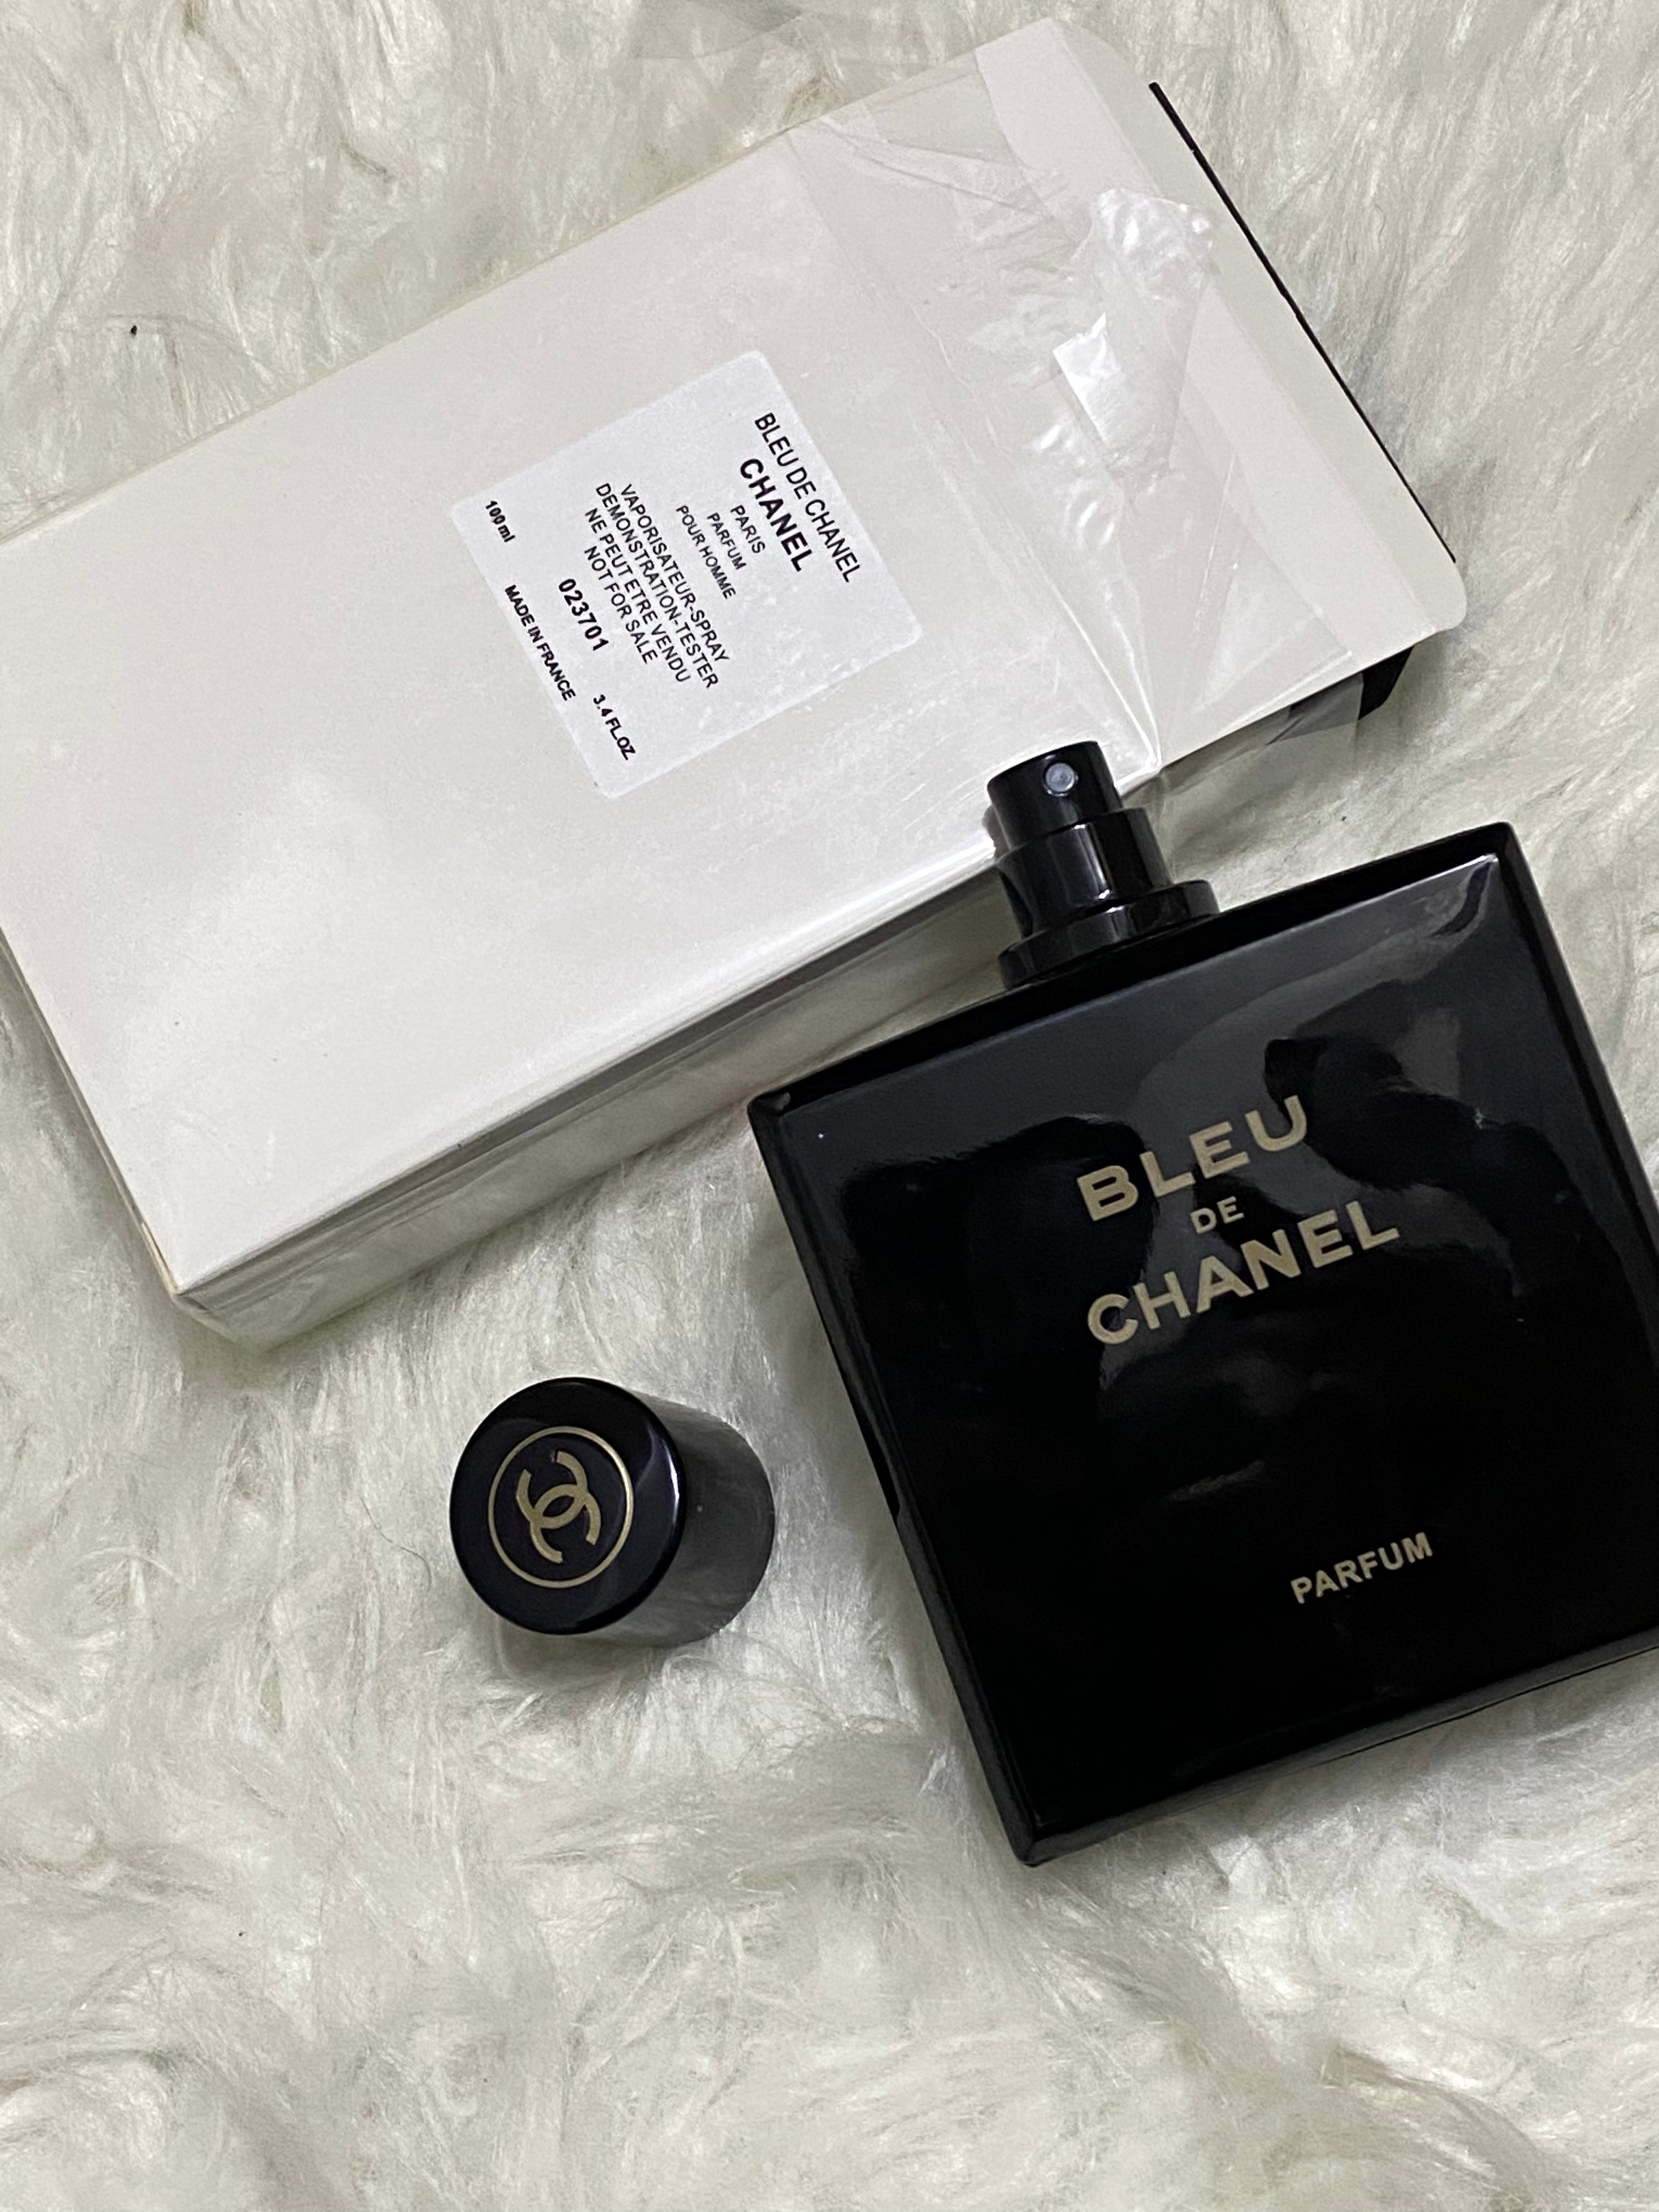 Bleu De Chanel Tester Perfume Men – Online Makeup Store